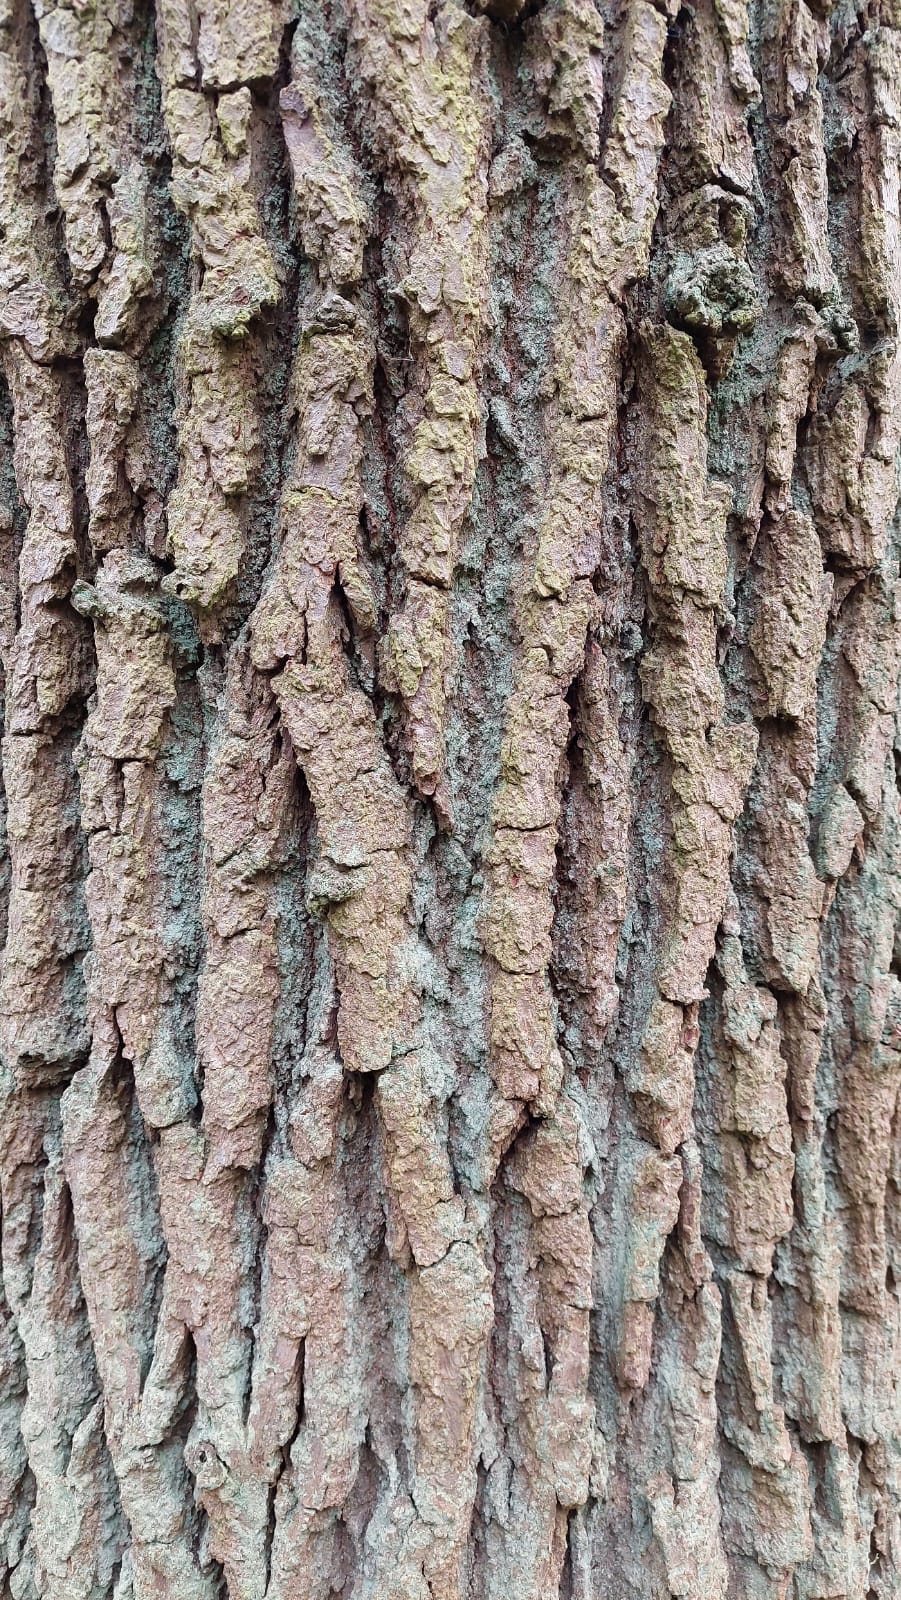 A close-up photograph of tree bark